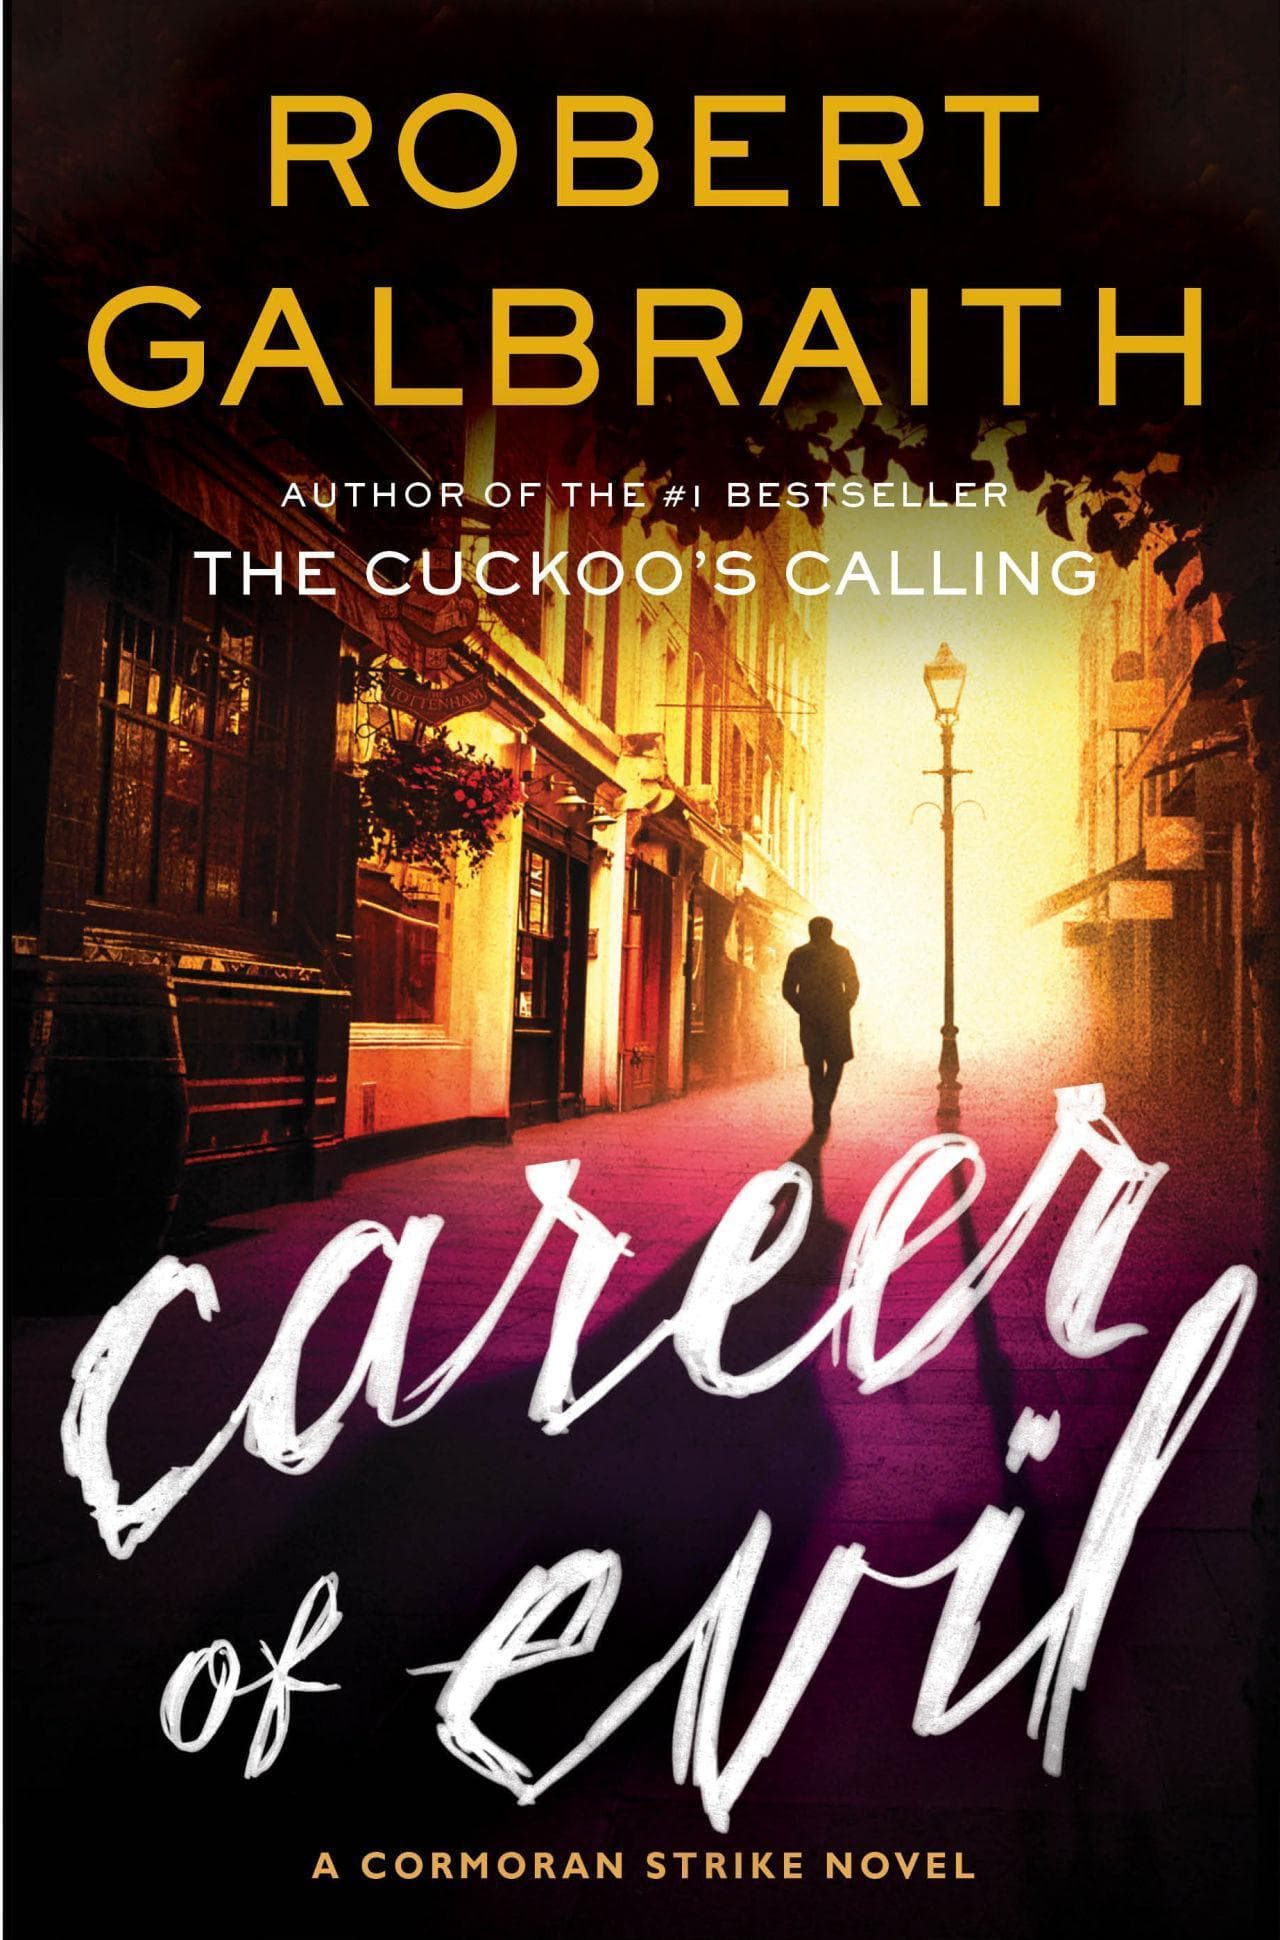 "Career of Evil" by Robert Galbraith, the pen name of J.K. Rowling. (Courtesy Hachette Audio)